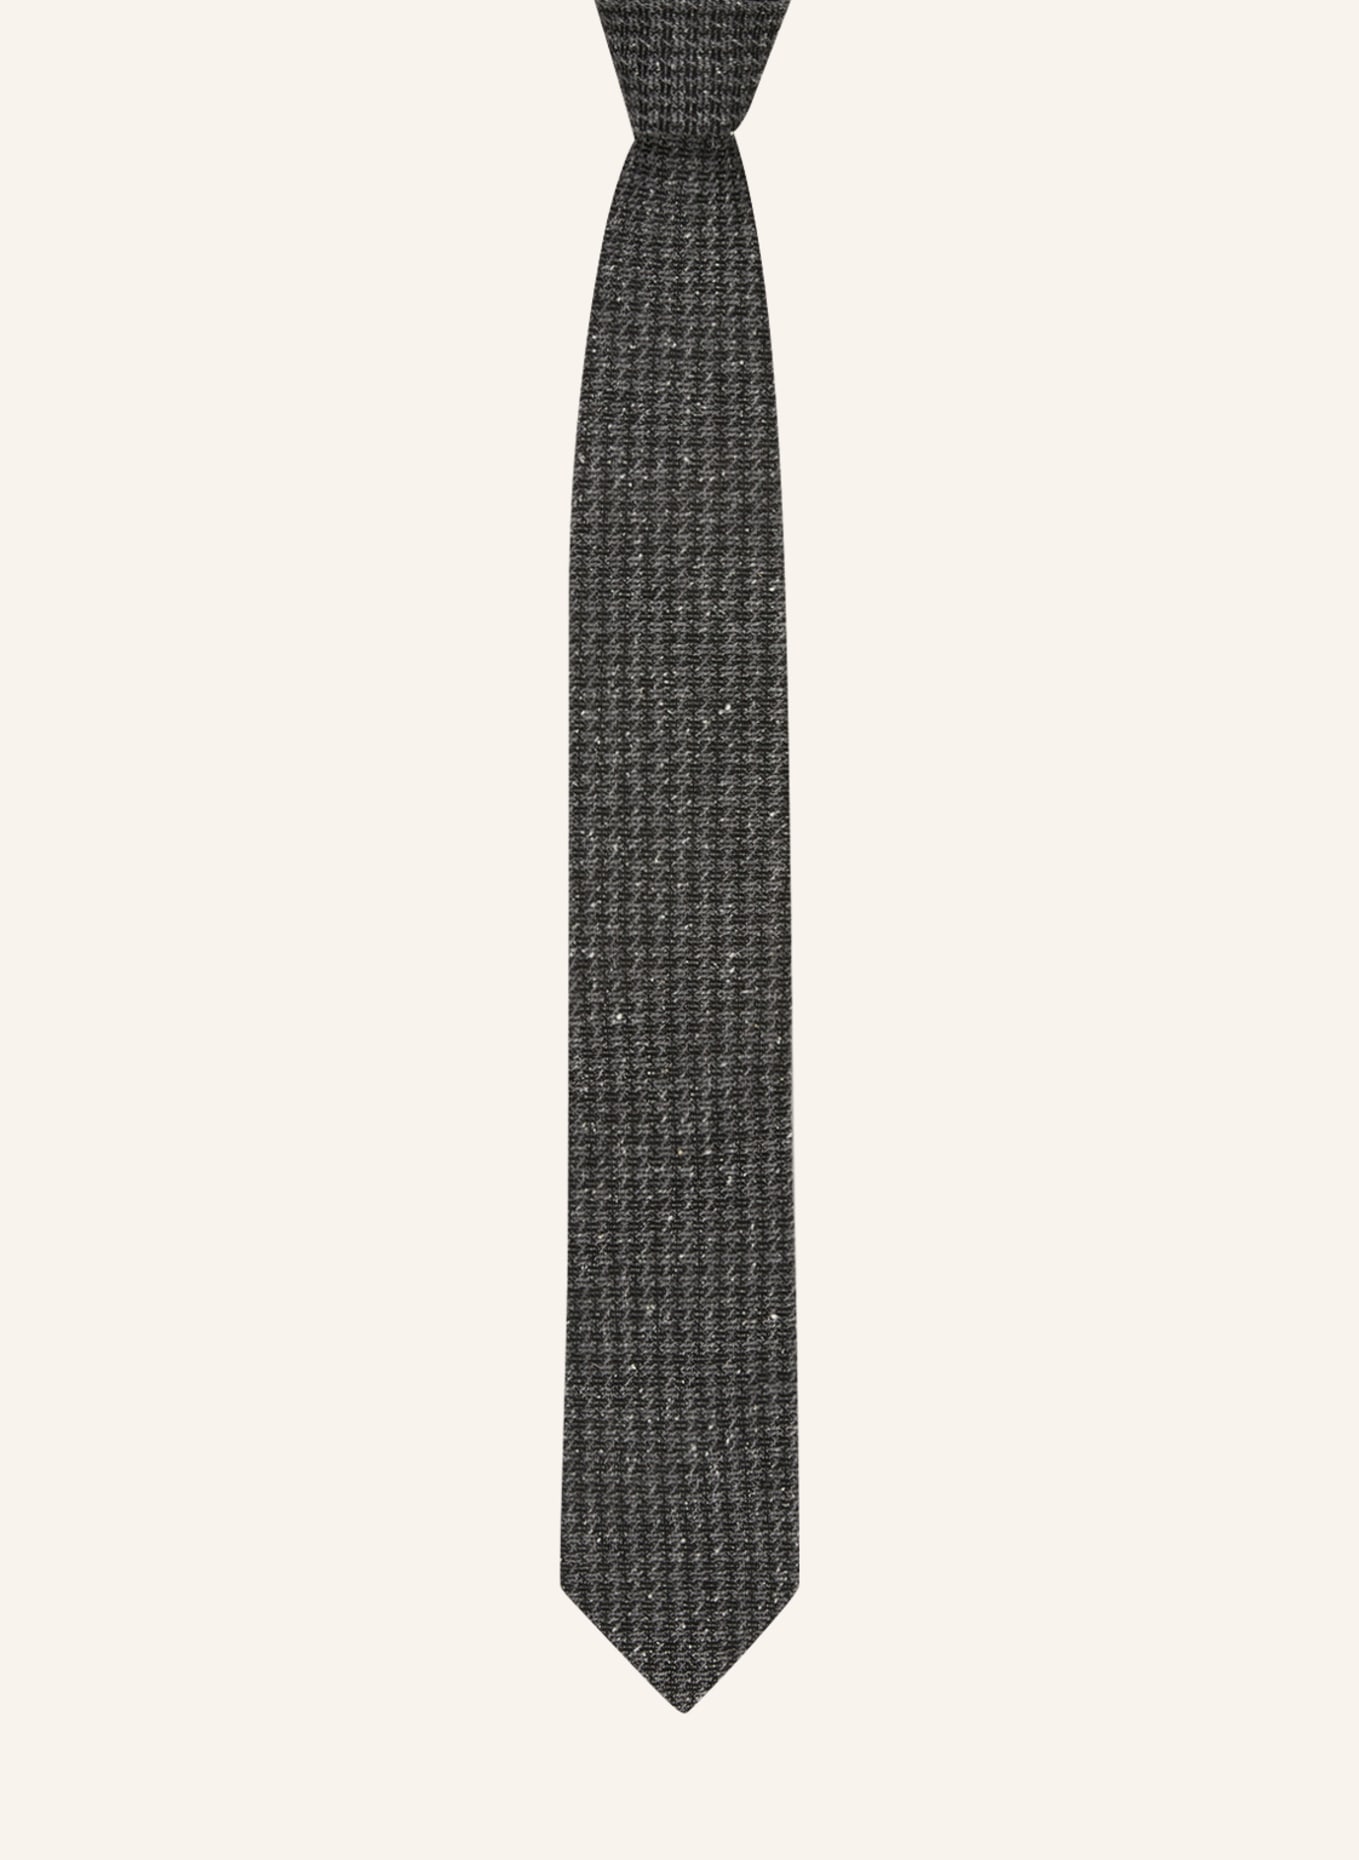 OLYMP schwarz/ grau in Krawatte